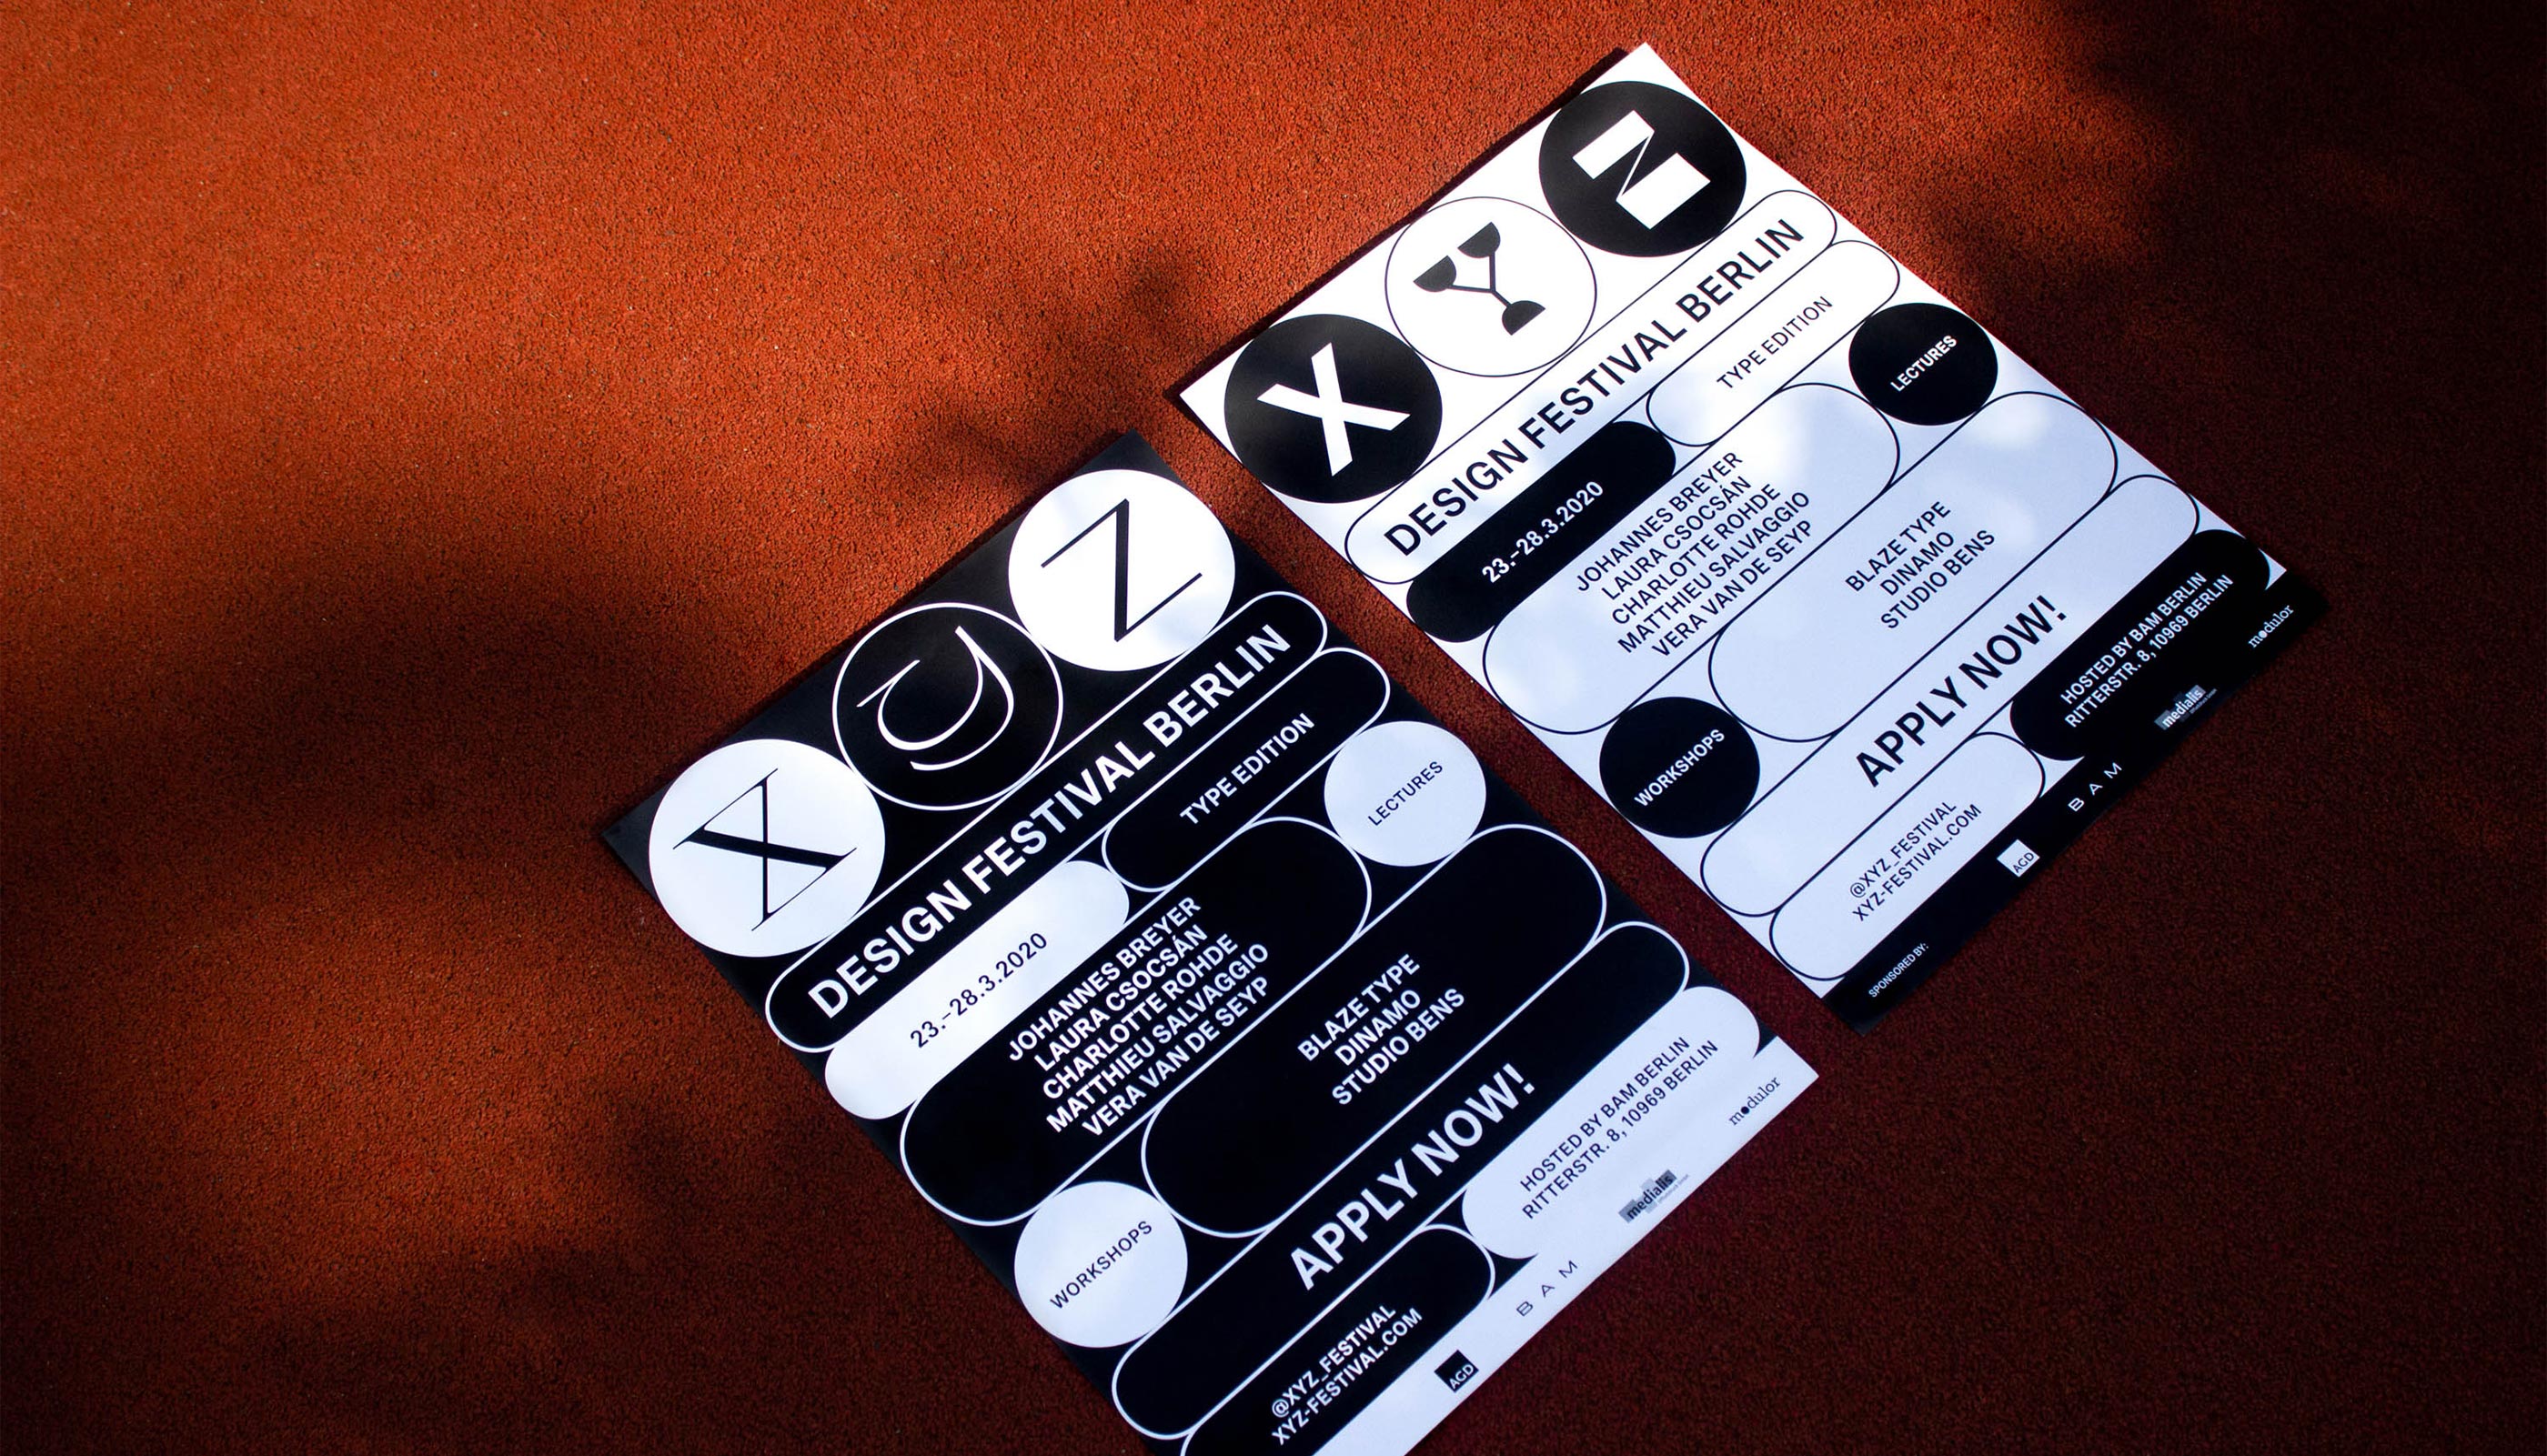 XYZ Design Festival Berlin, web design, logo design, poster design, visual identity, branding